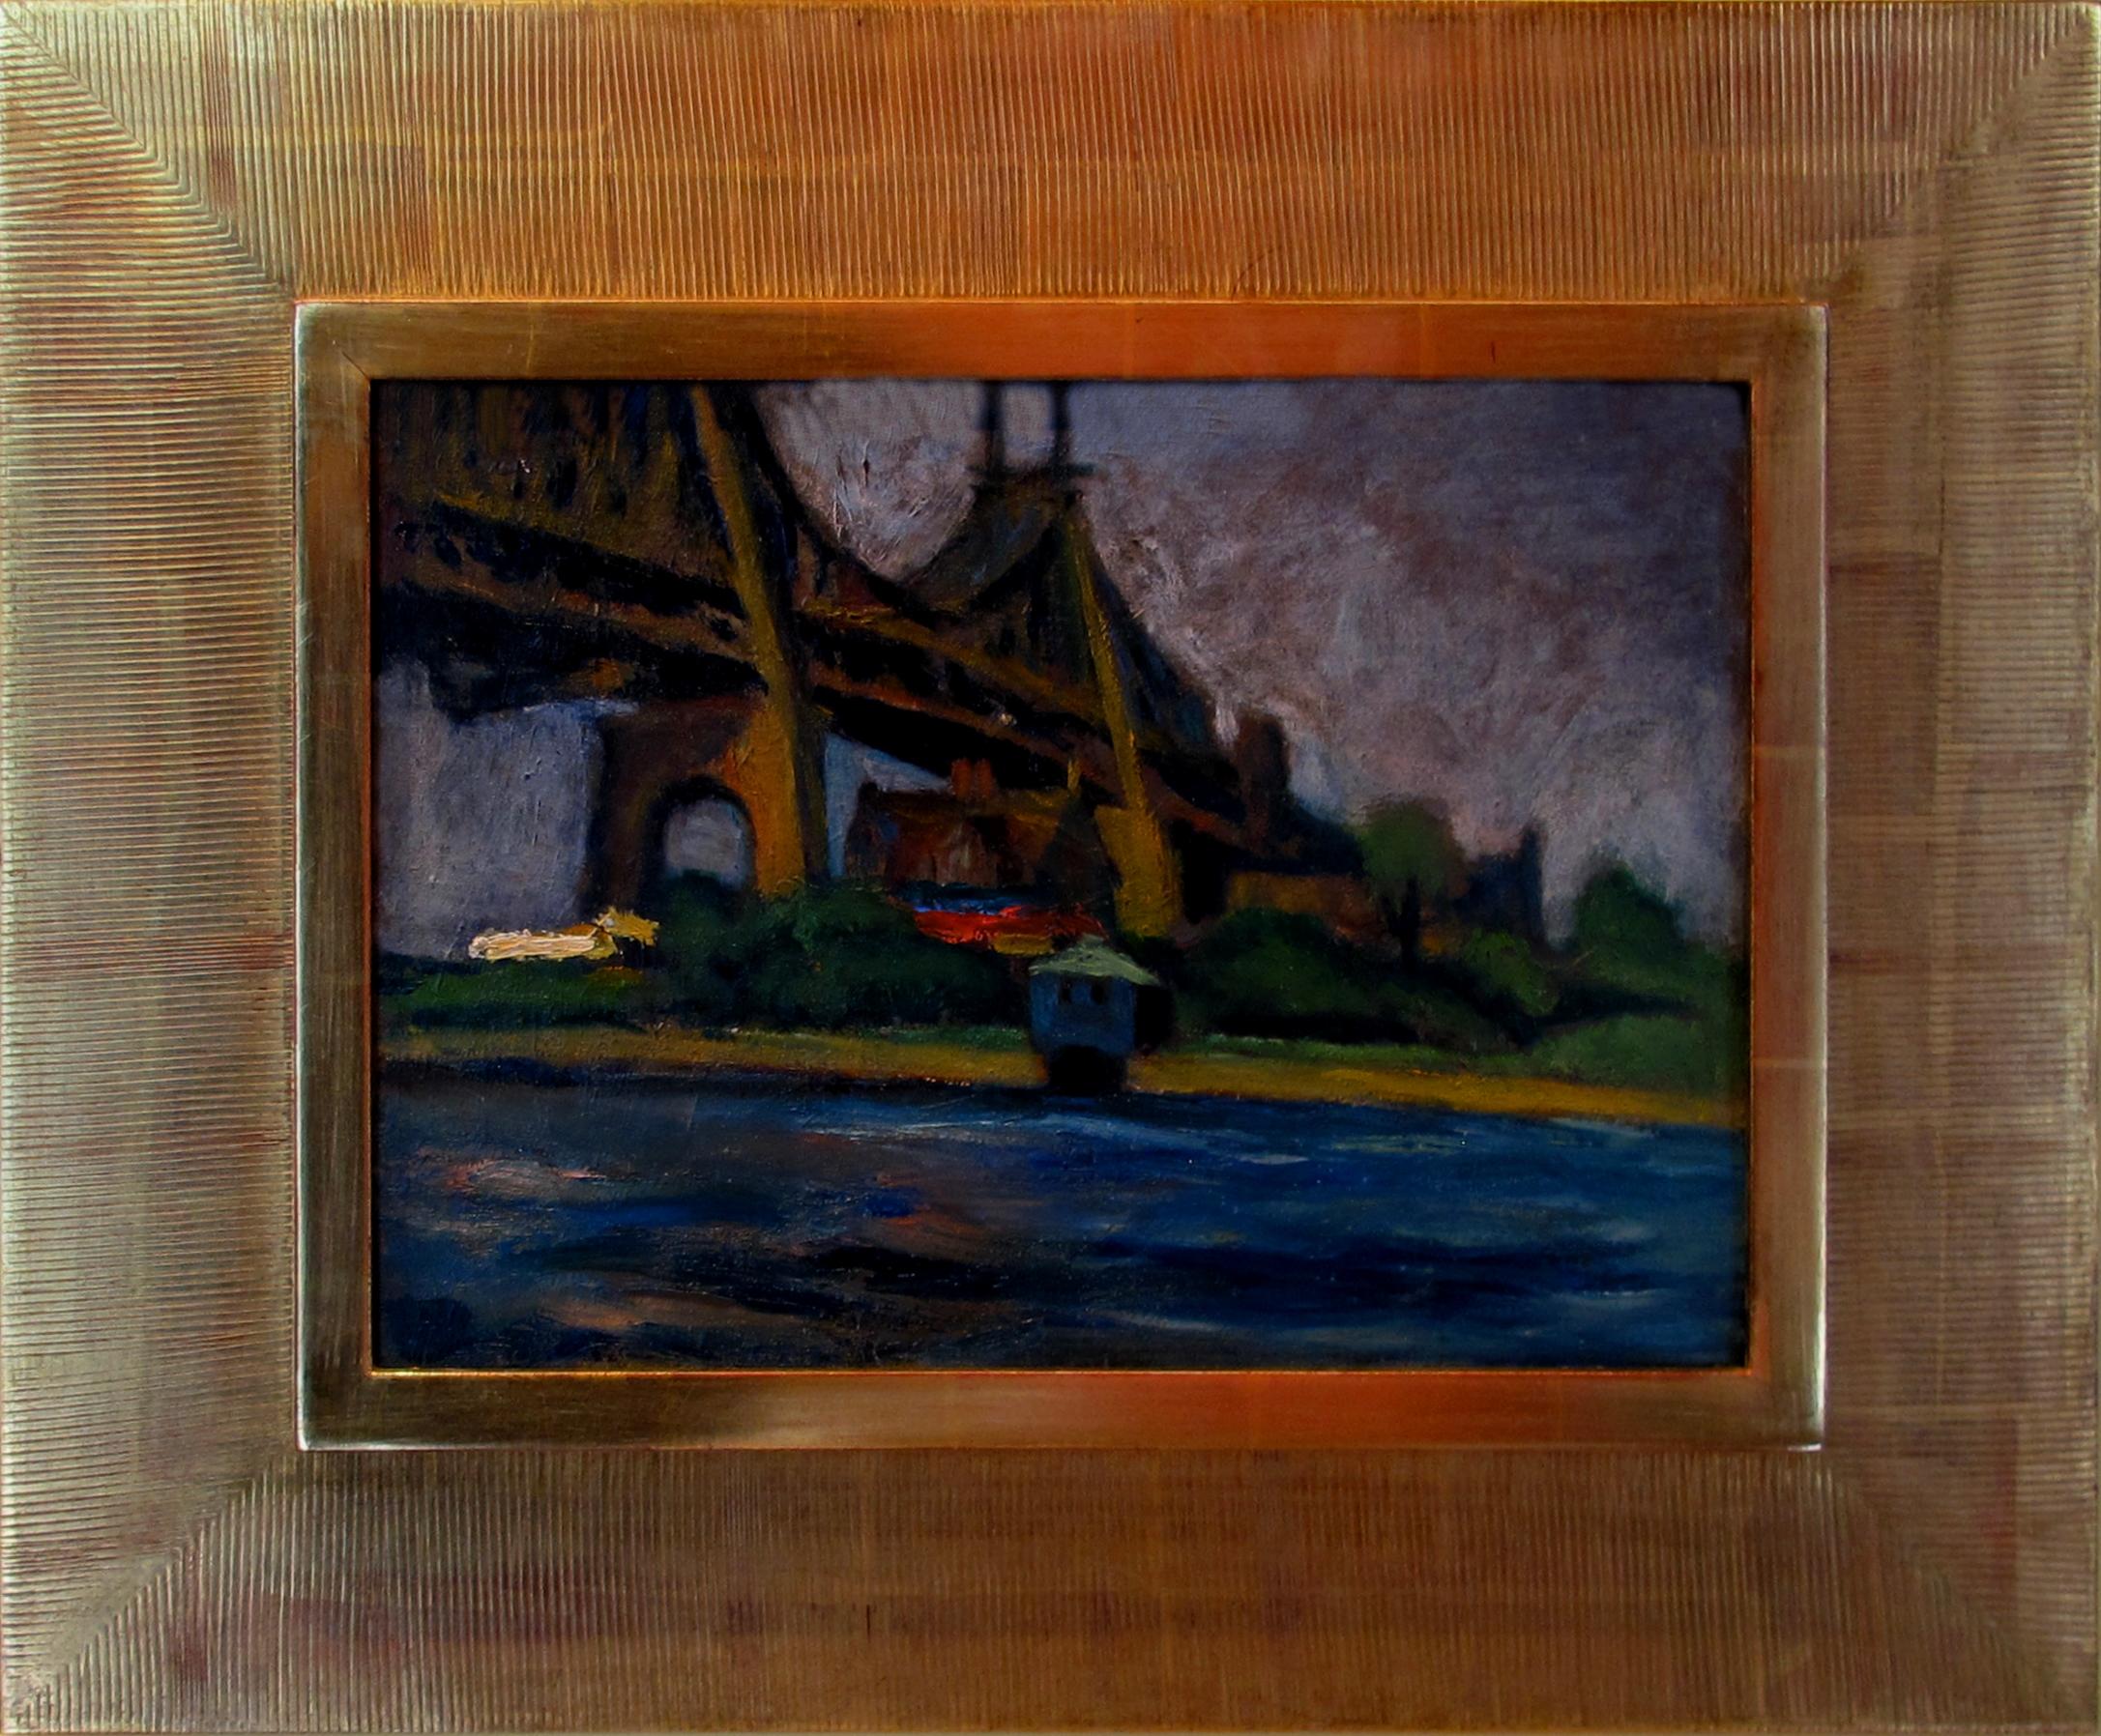 Gershon Benjamin Landscape Painting - "George Washington Bridge" / "The Musician"